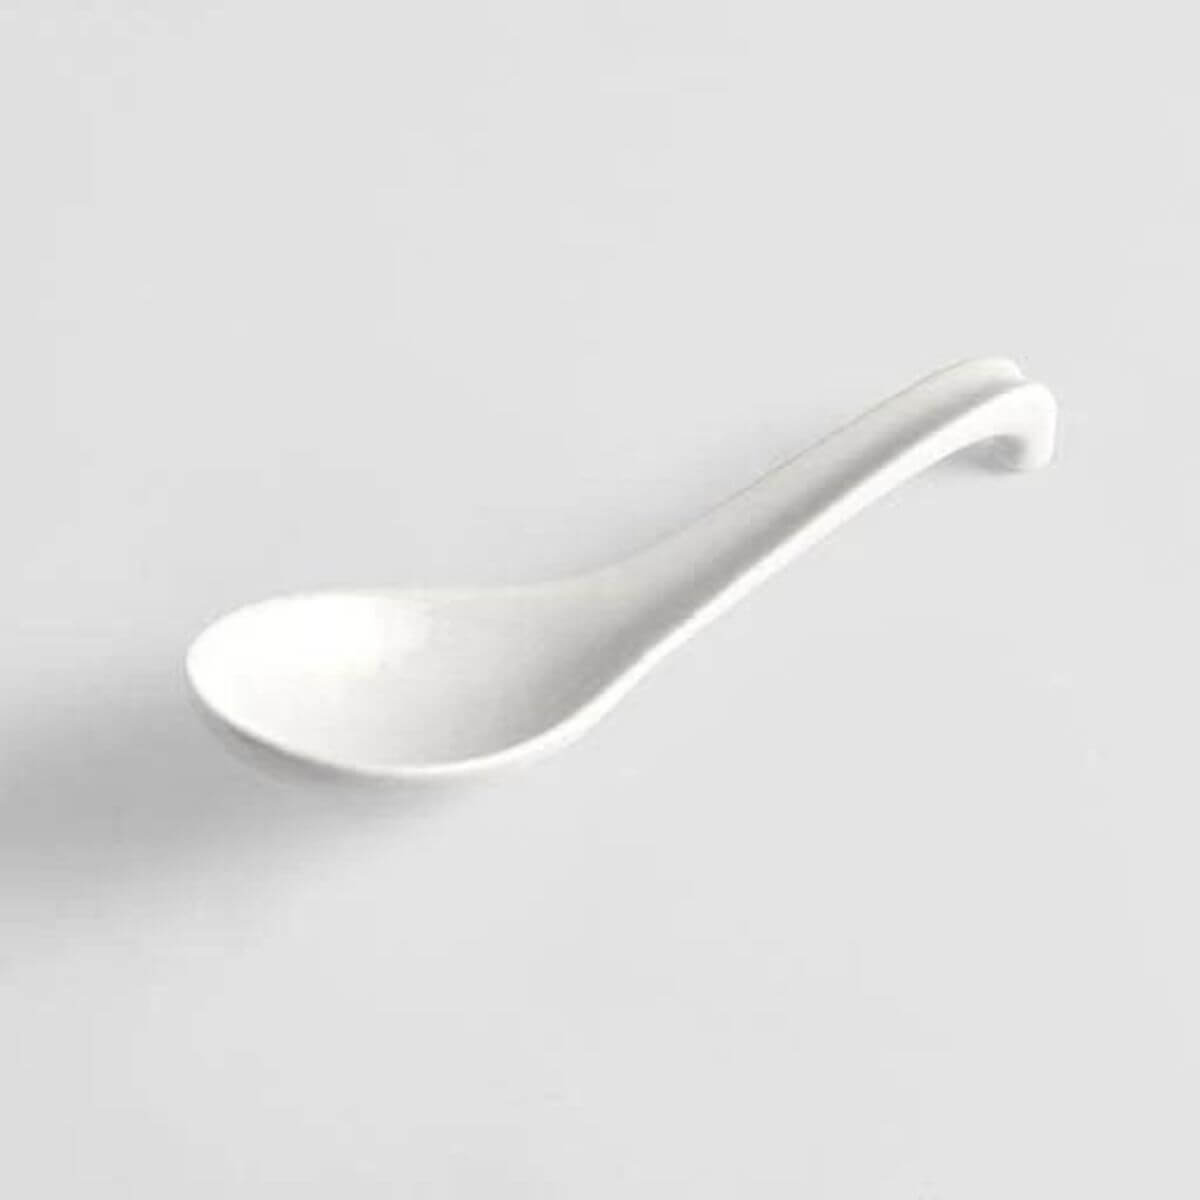 Naibu Large Spoon White